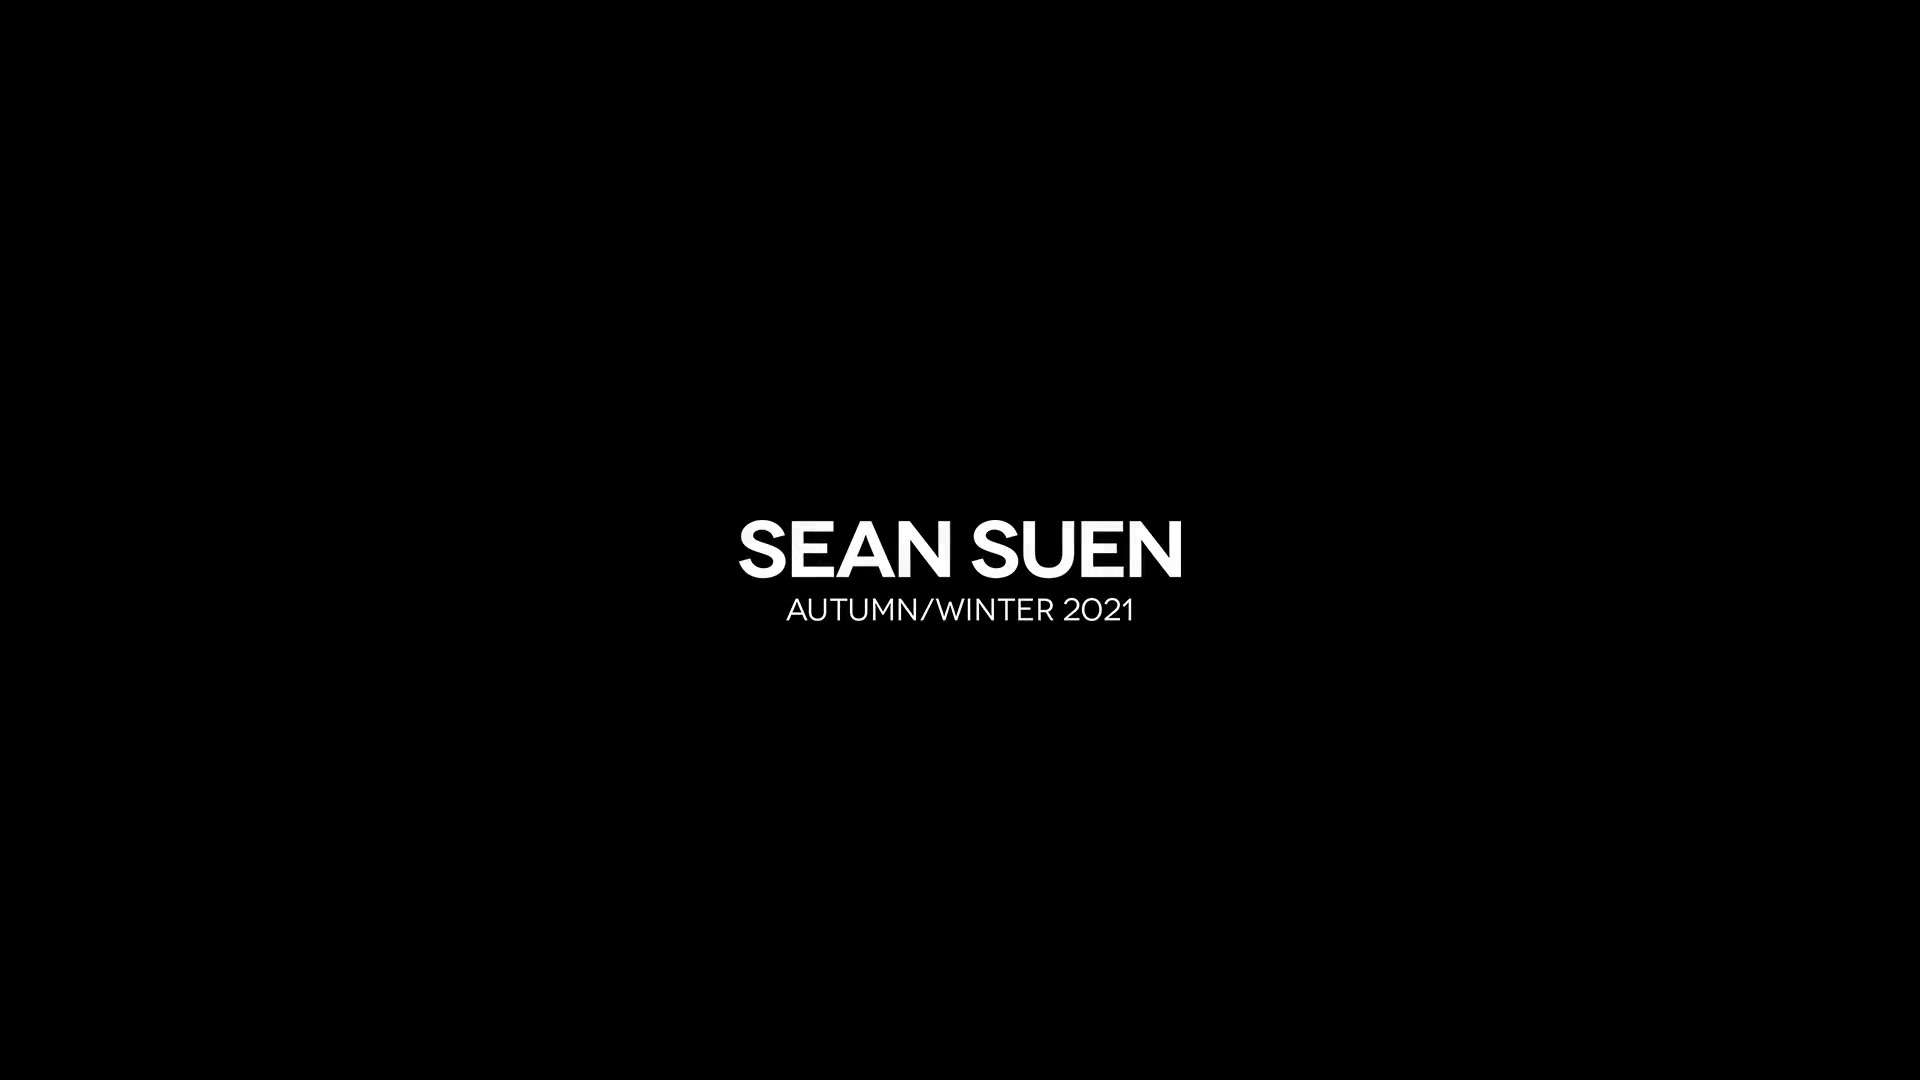 SEAN SUEN AW21 - THE MEDIOCRE MONSTER